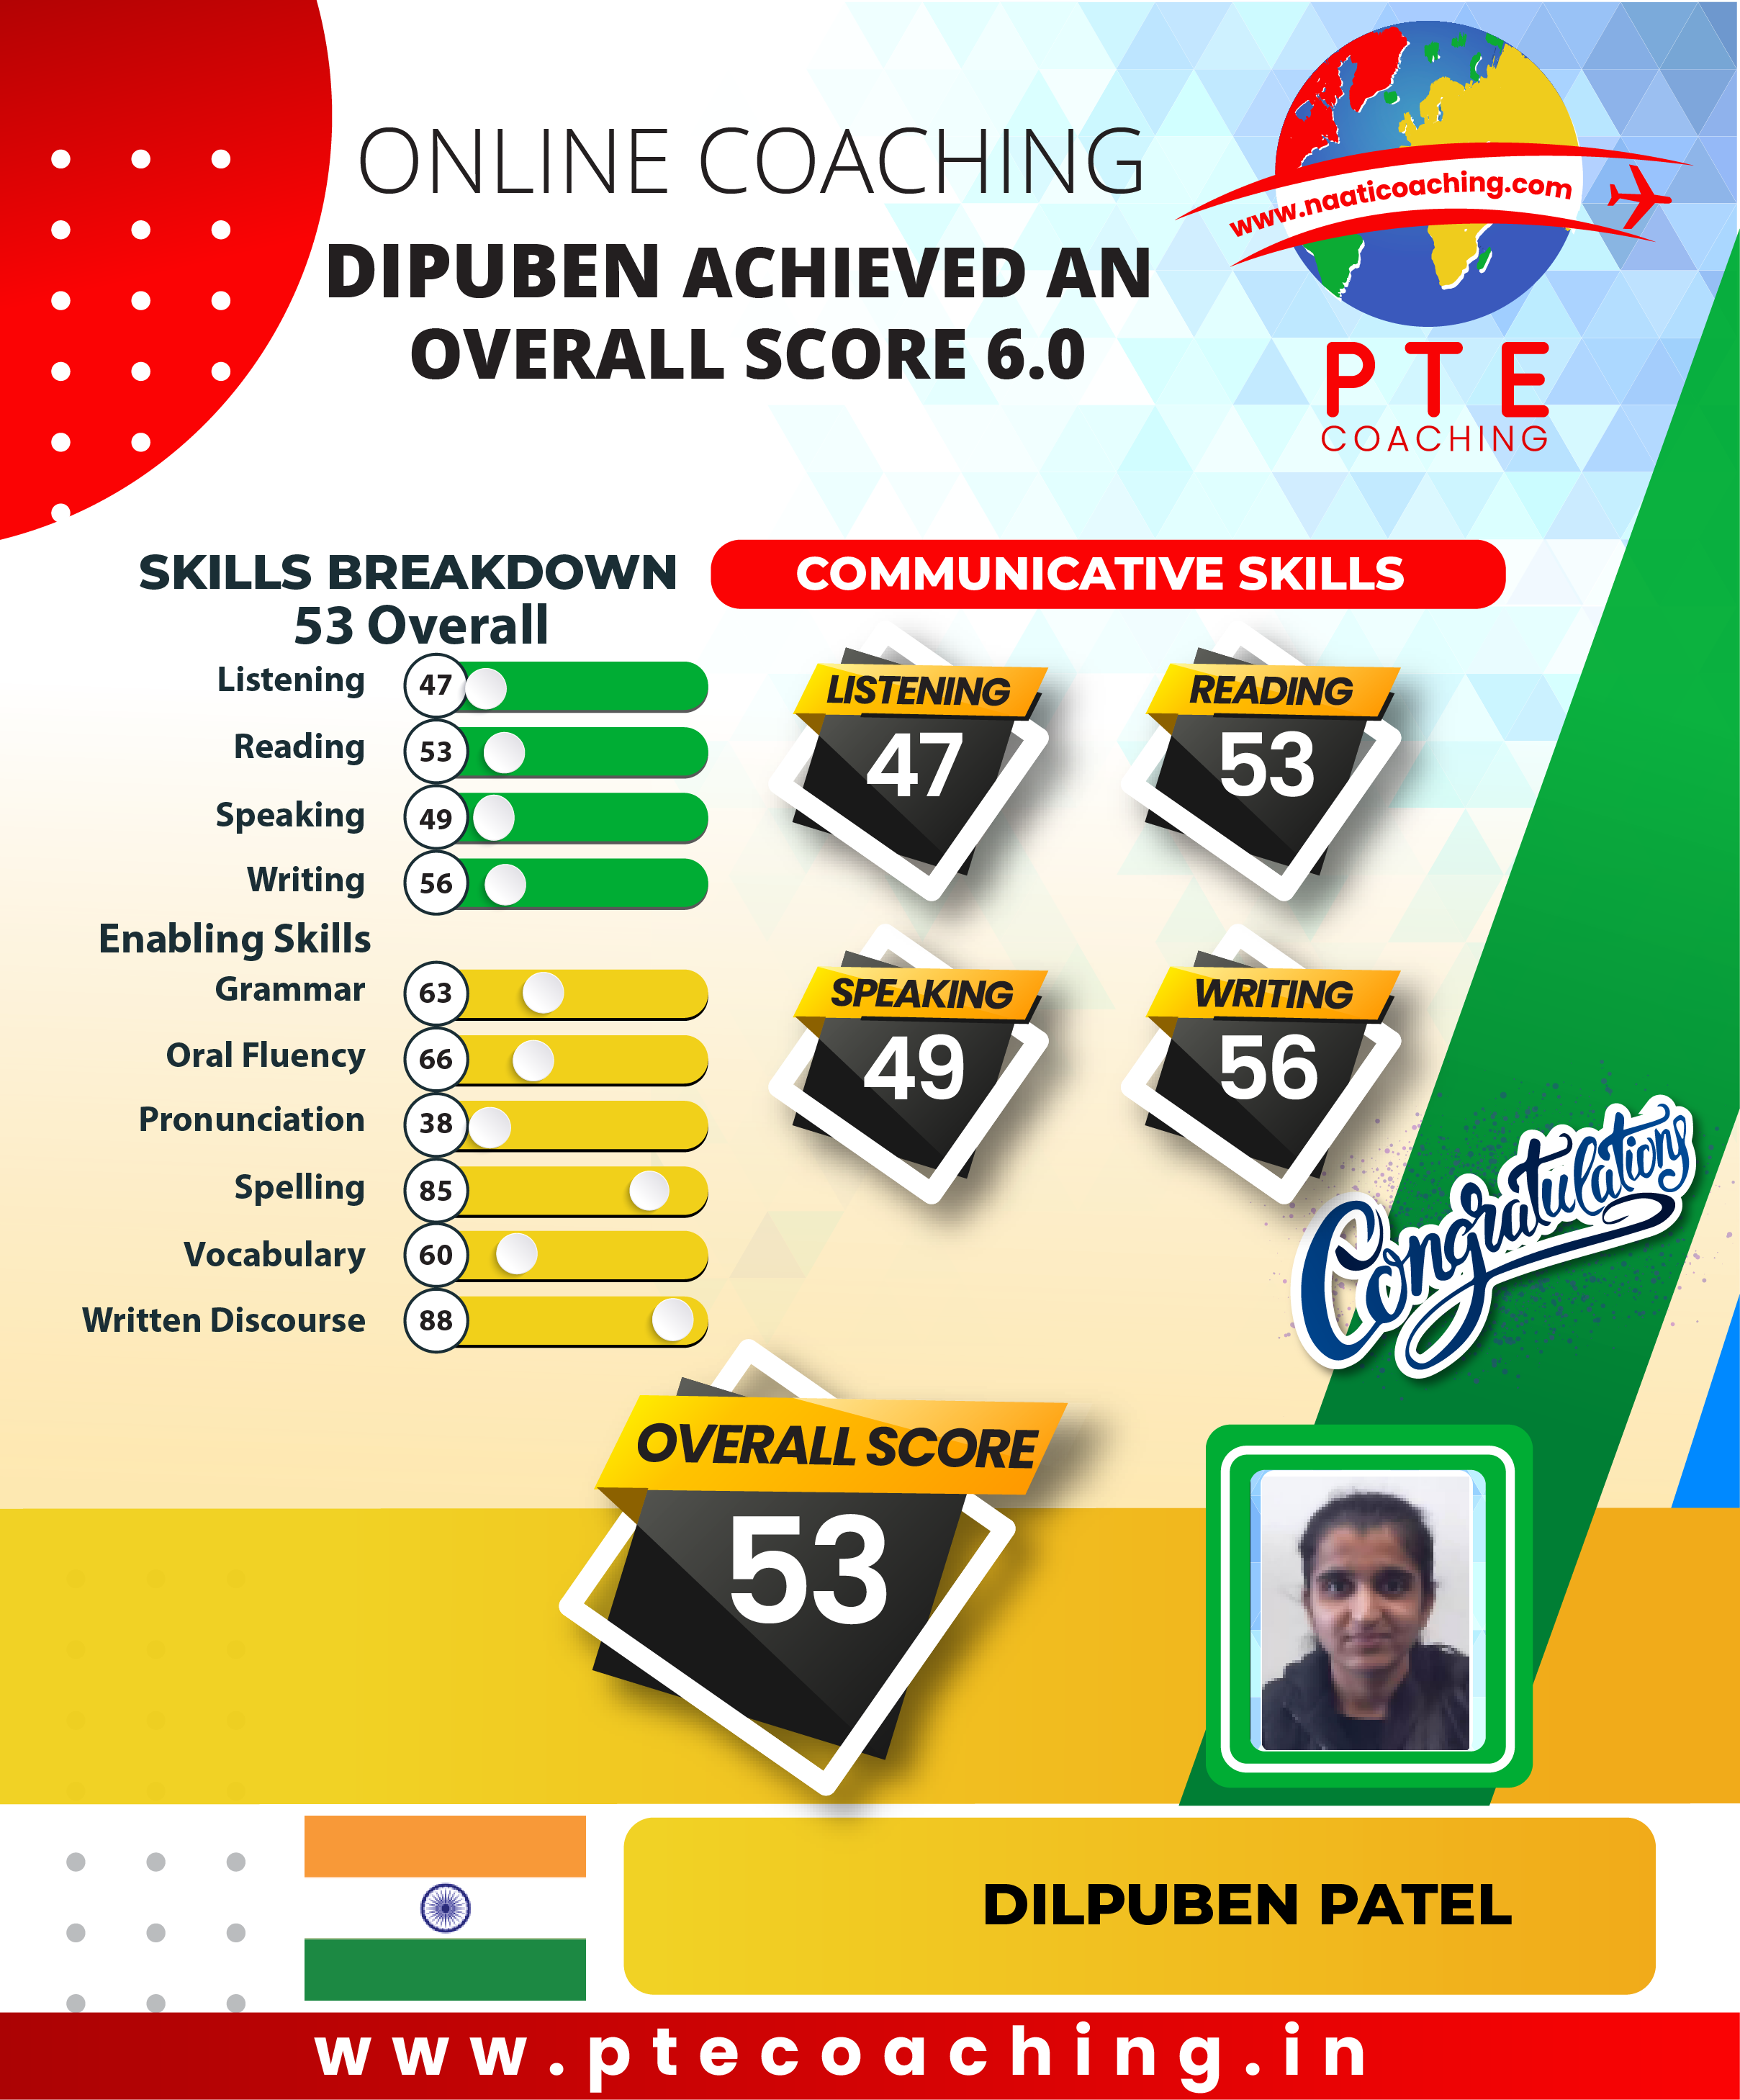 PTE Coaching Scorecard - Dipuben achieved an overall score 6.0